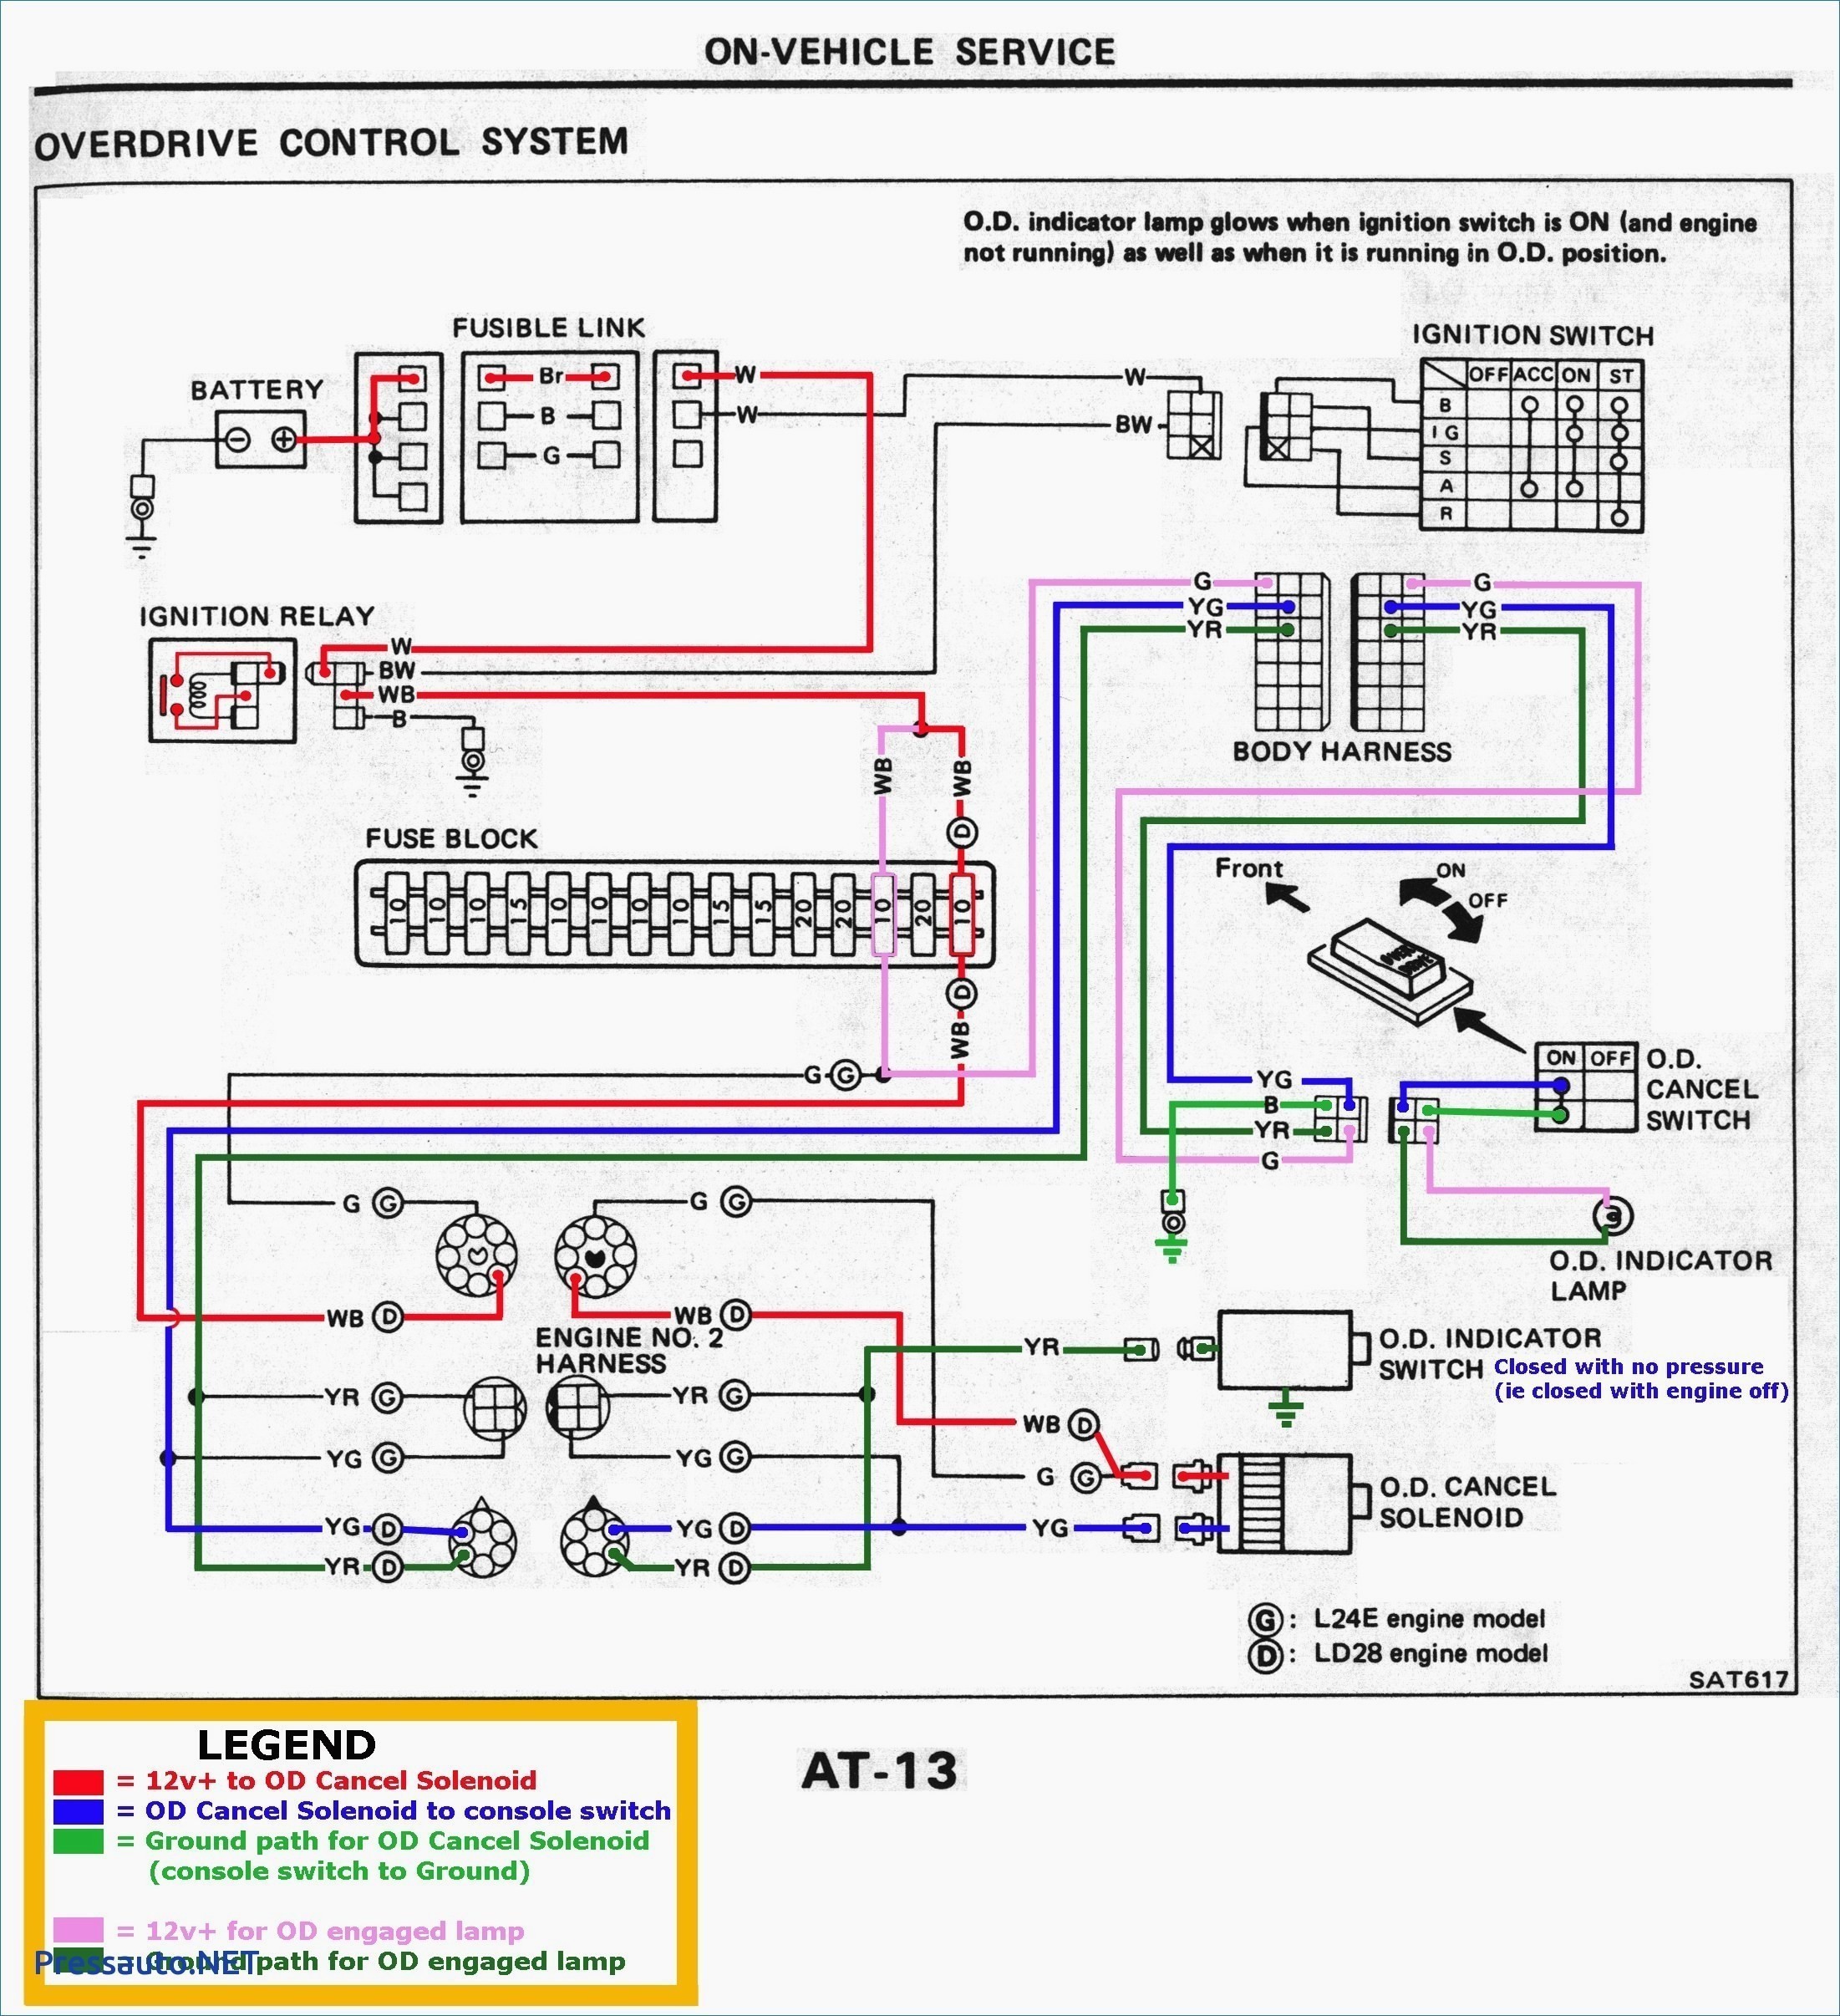 Car Engine Diagram Parts Auto Diagram Manuals Schematics Wiring Diagrams • Of Car Engine Diagram Parts